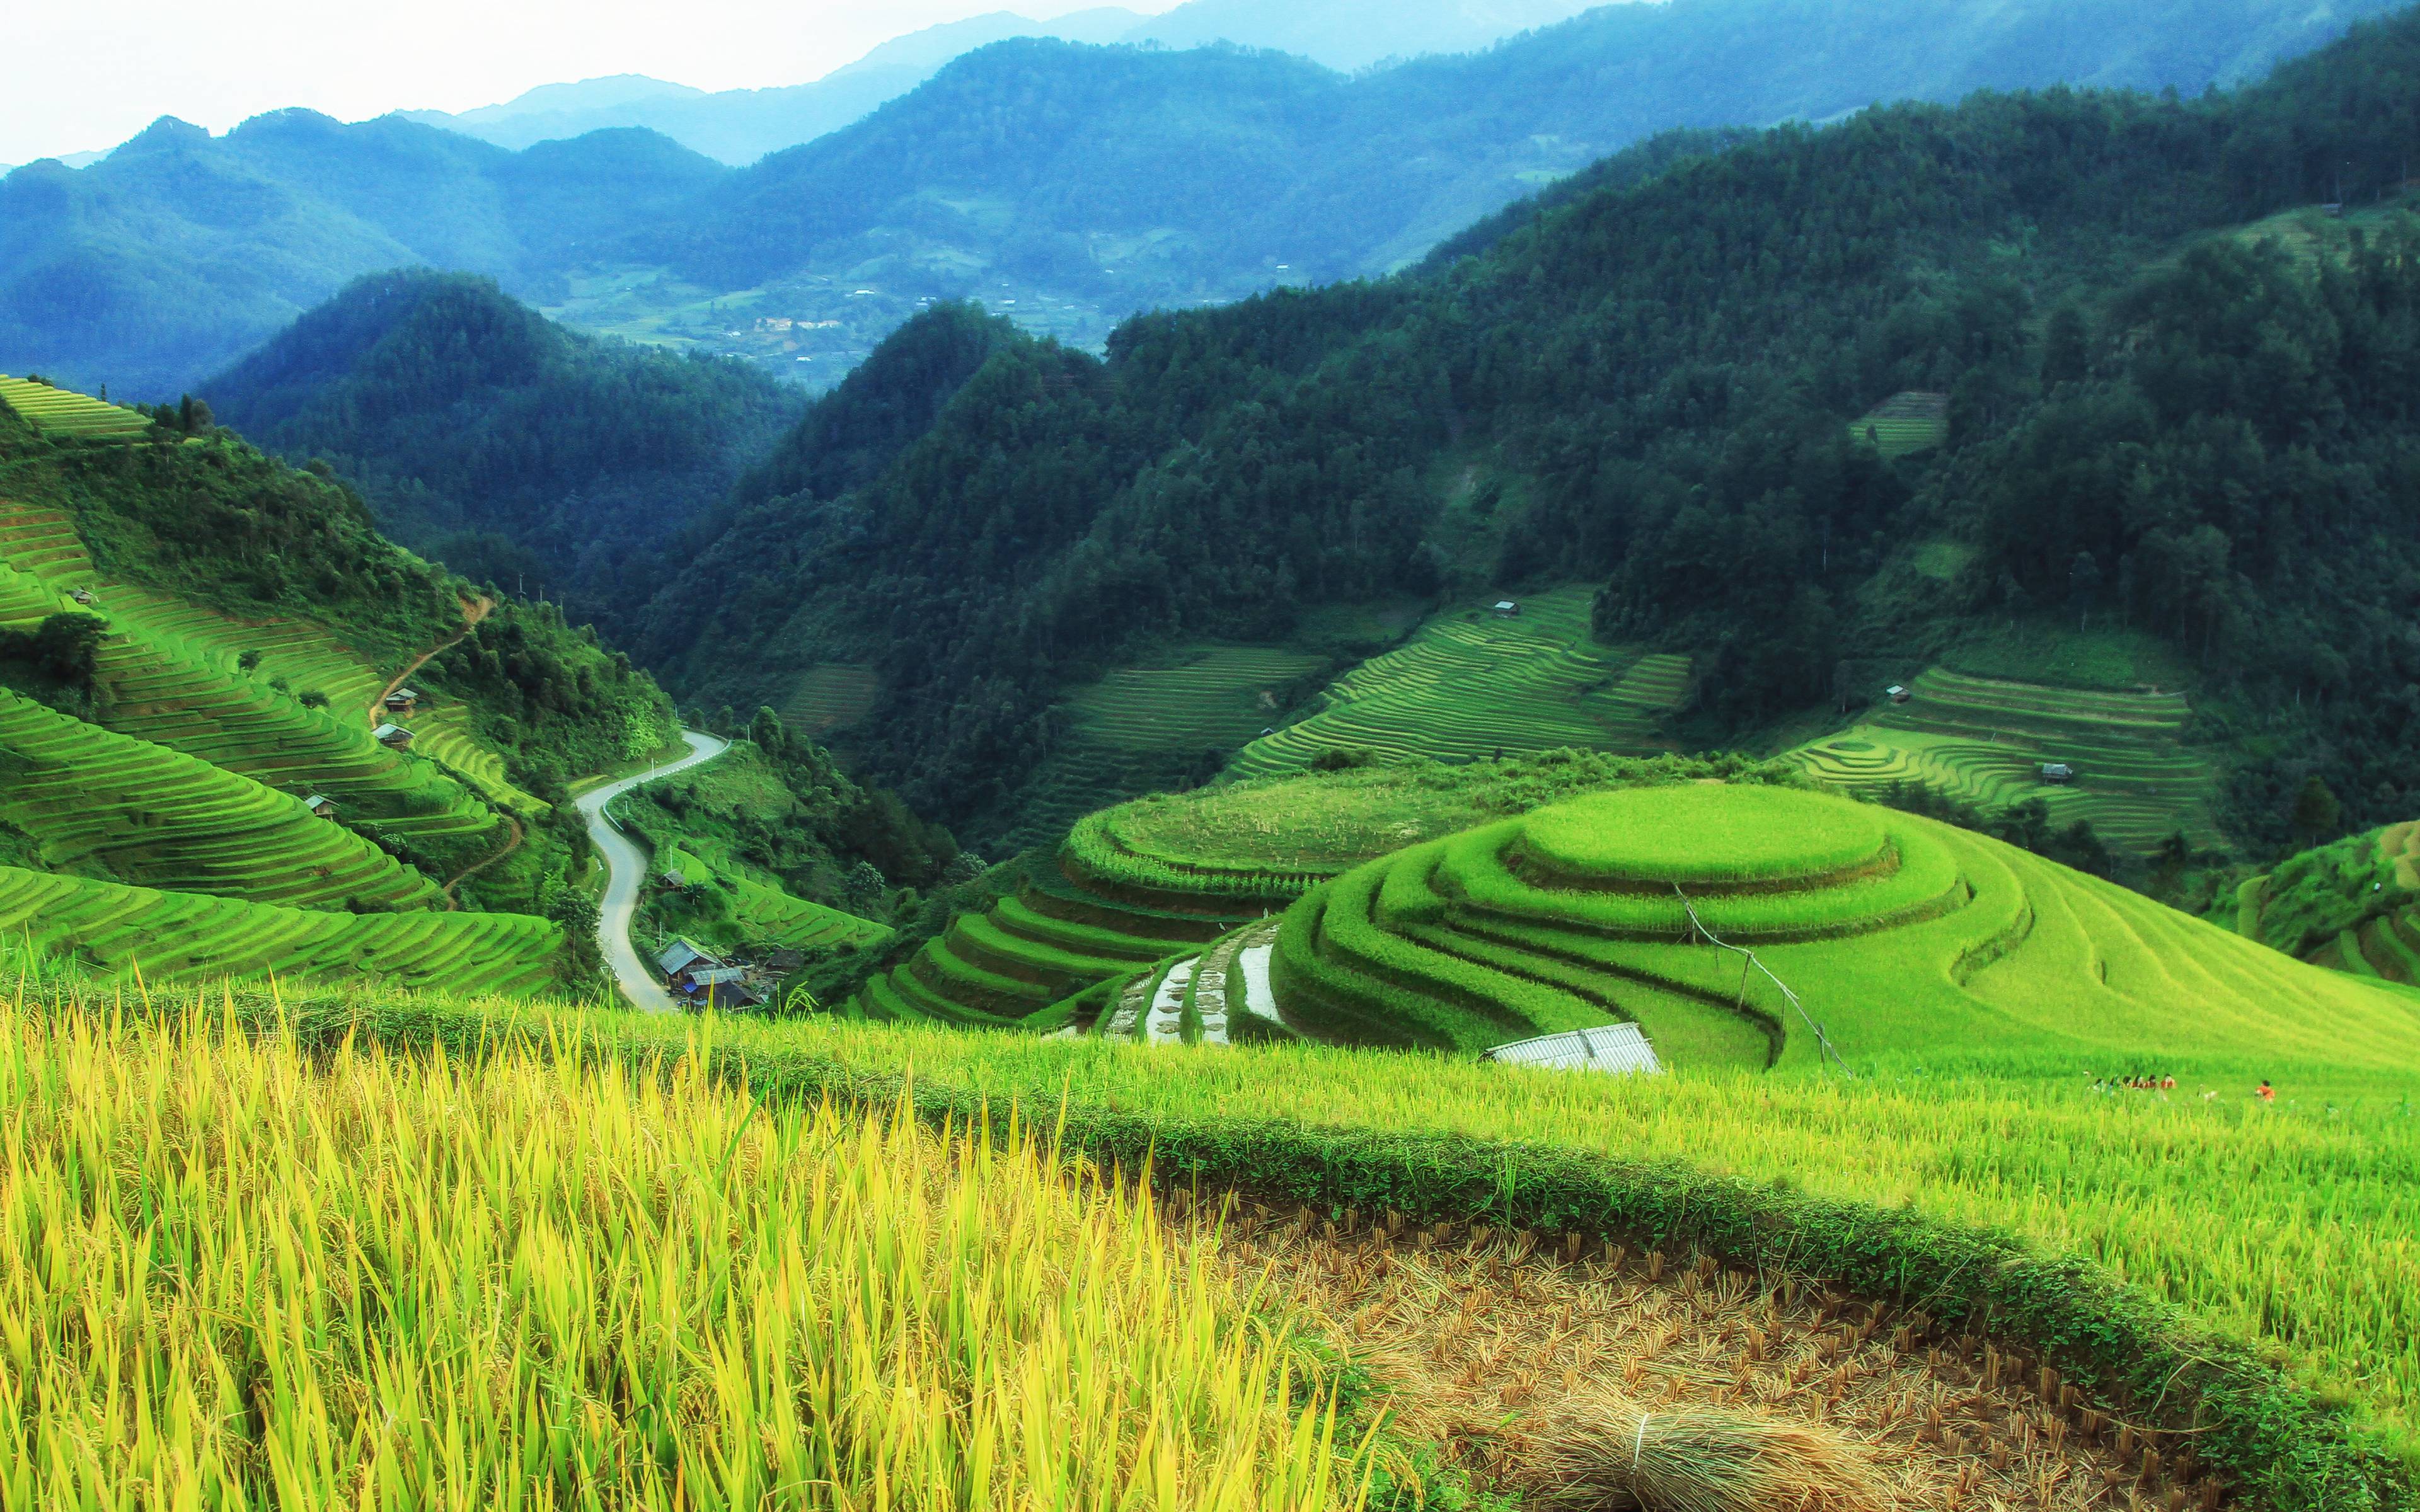 Les rizières en terrasse fabuleuses à Mu Cang Chai